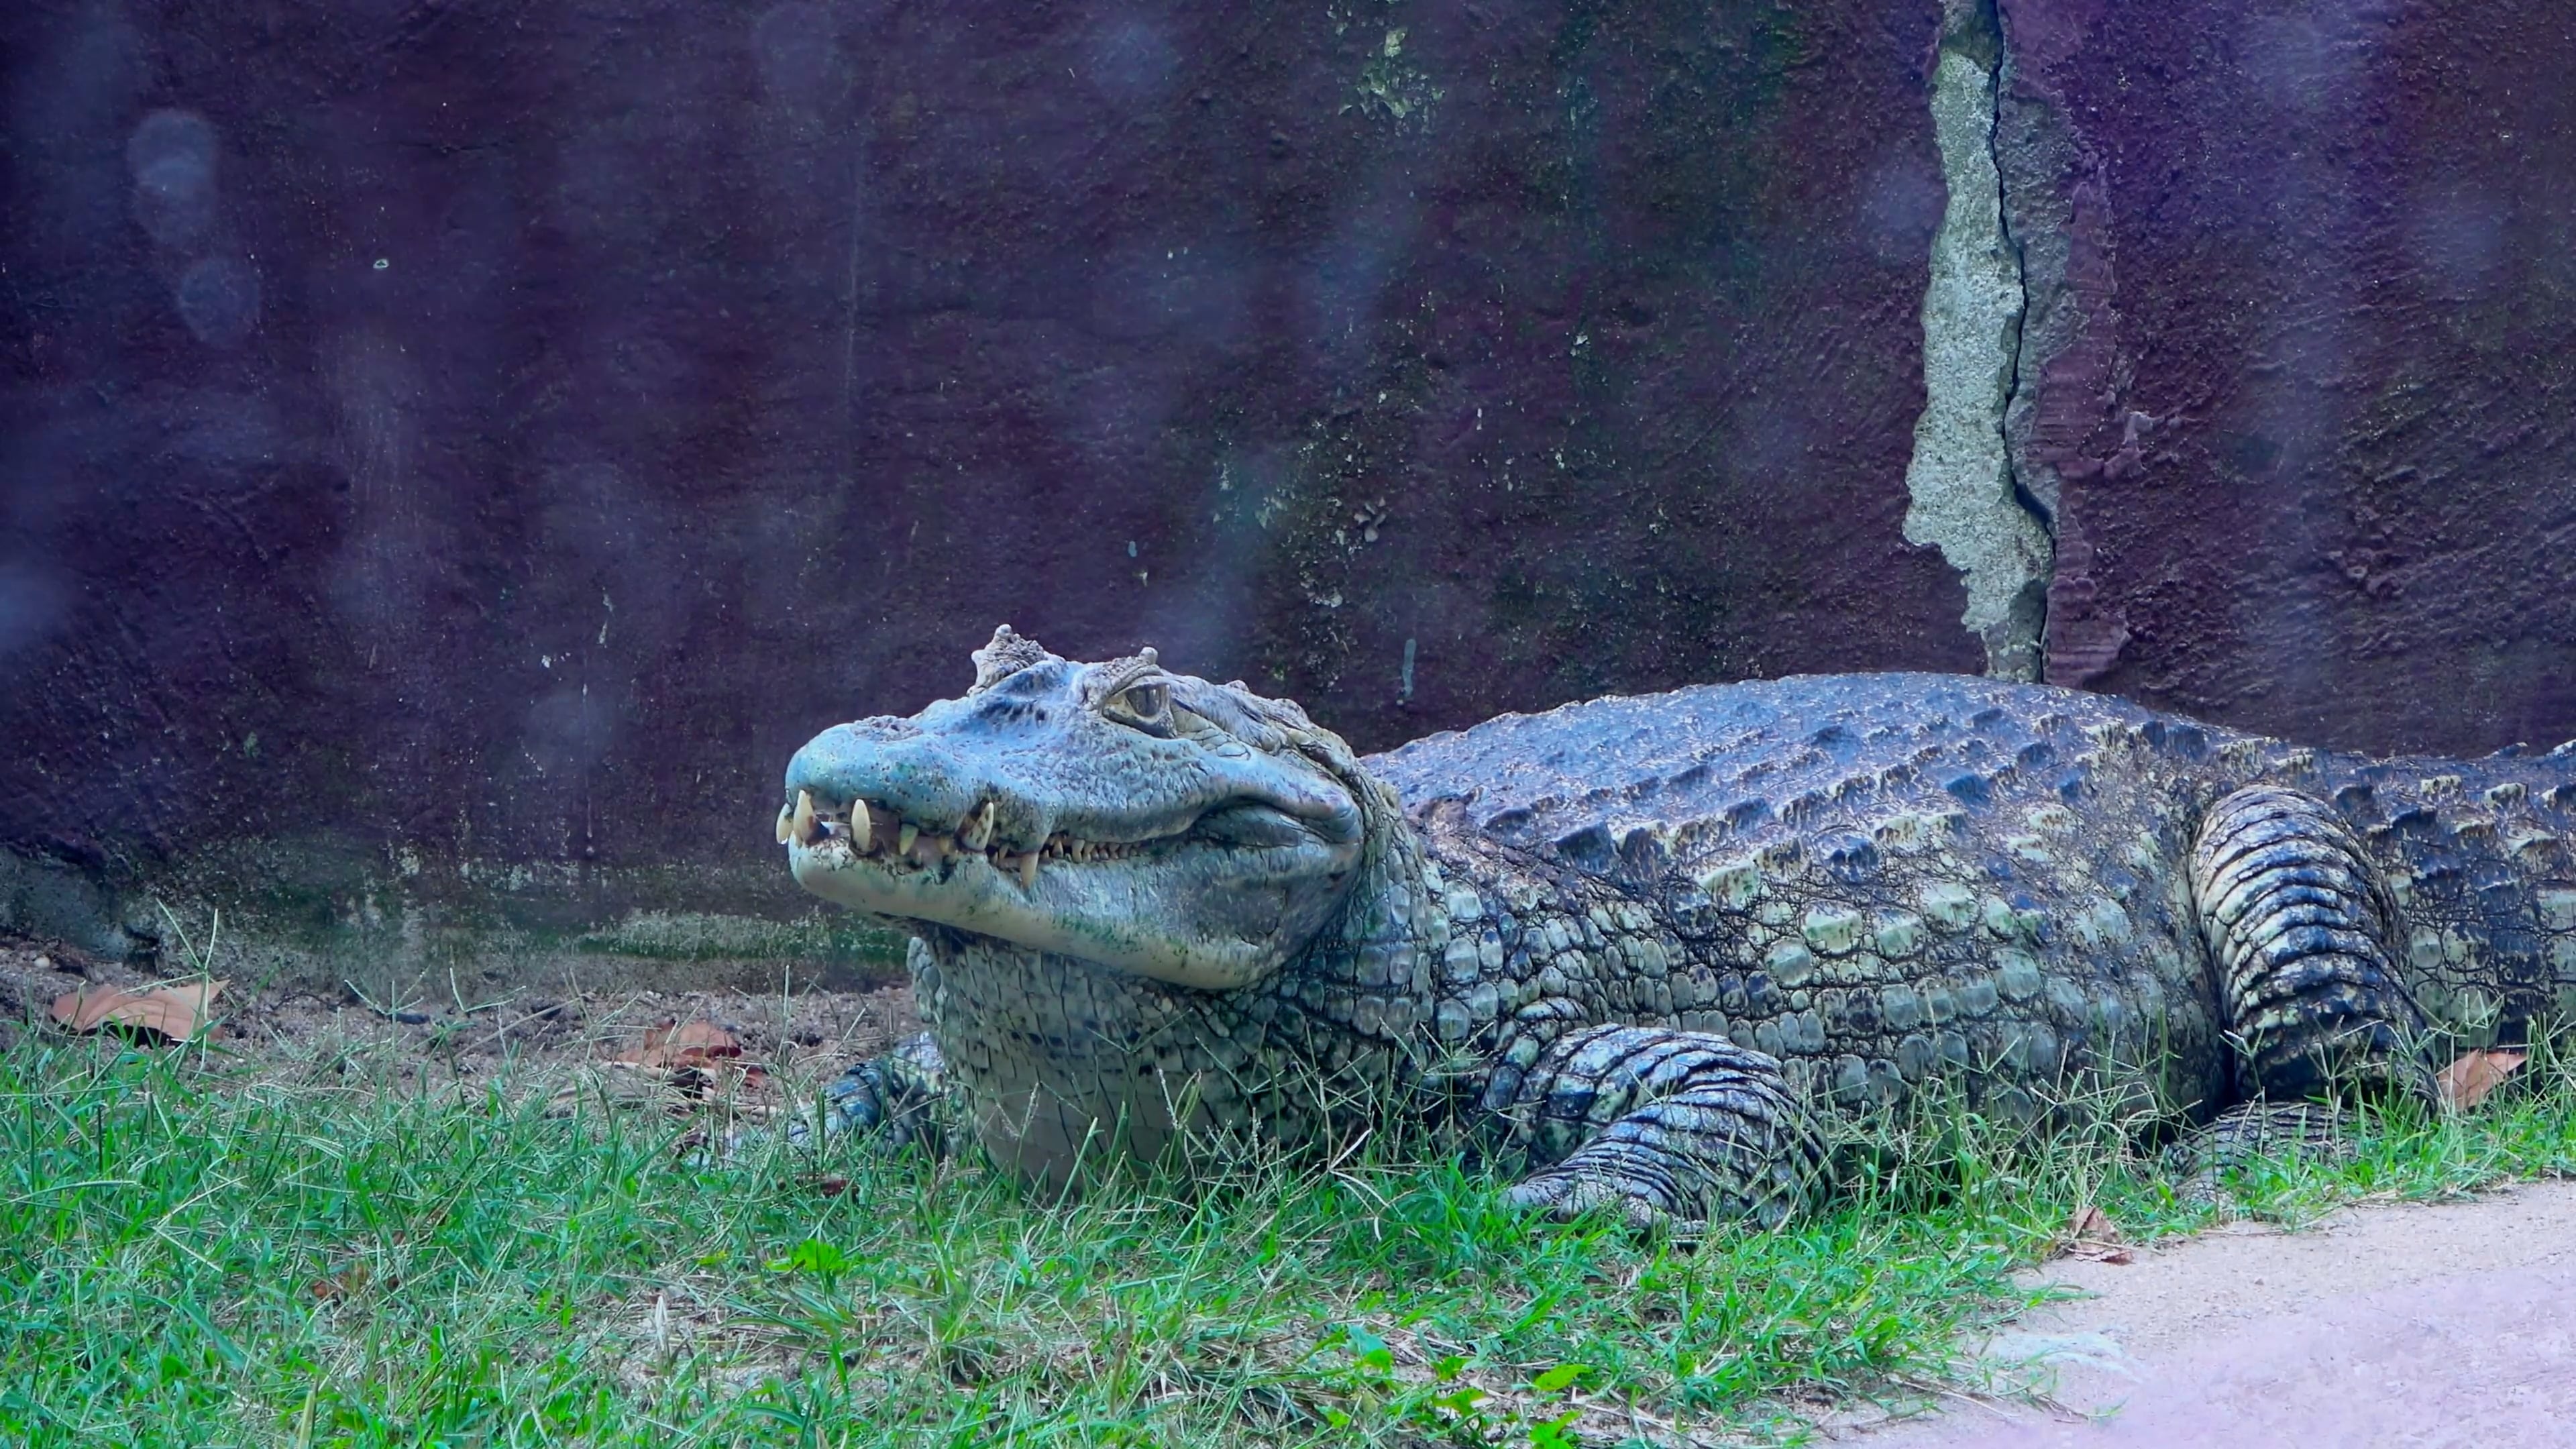 Alligator staying without move, Reptile video, Wildlife footage, Animal behavior, 3840x2160 4K Desktop